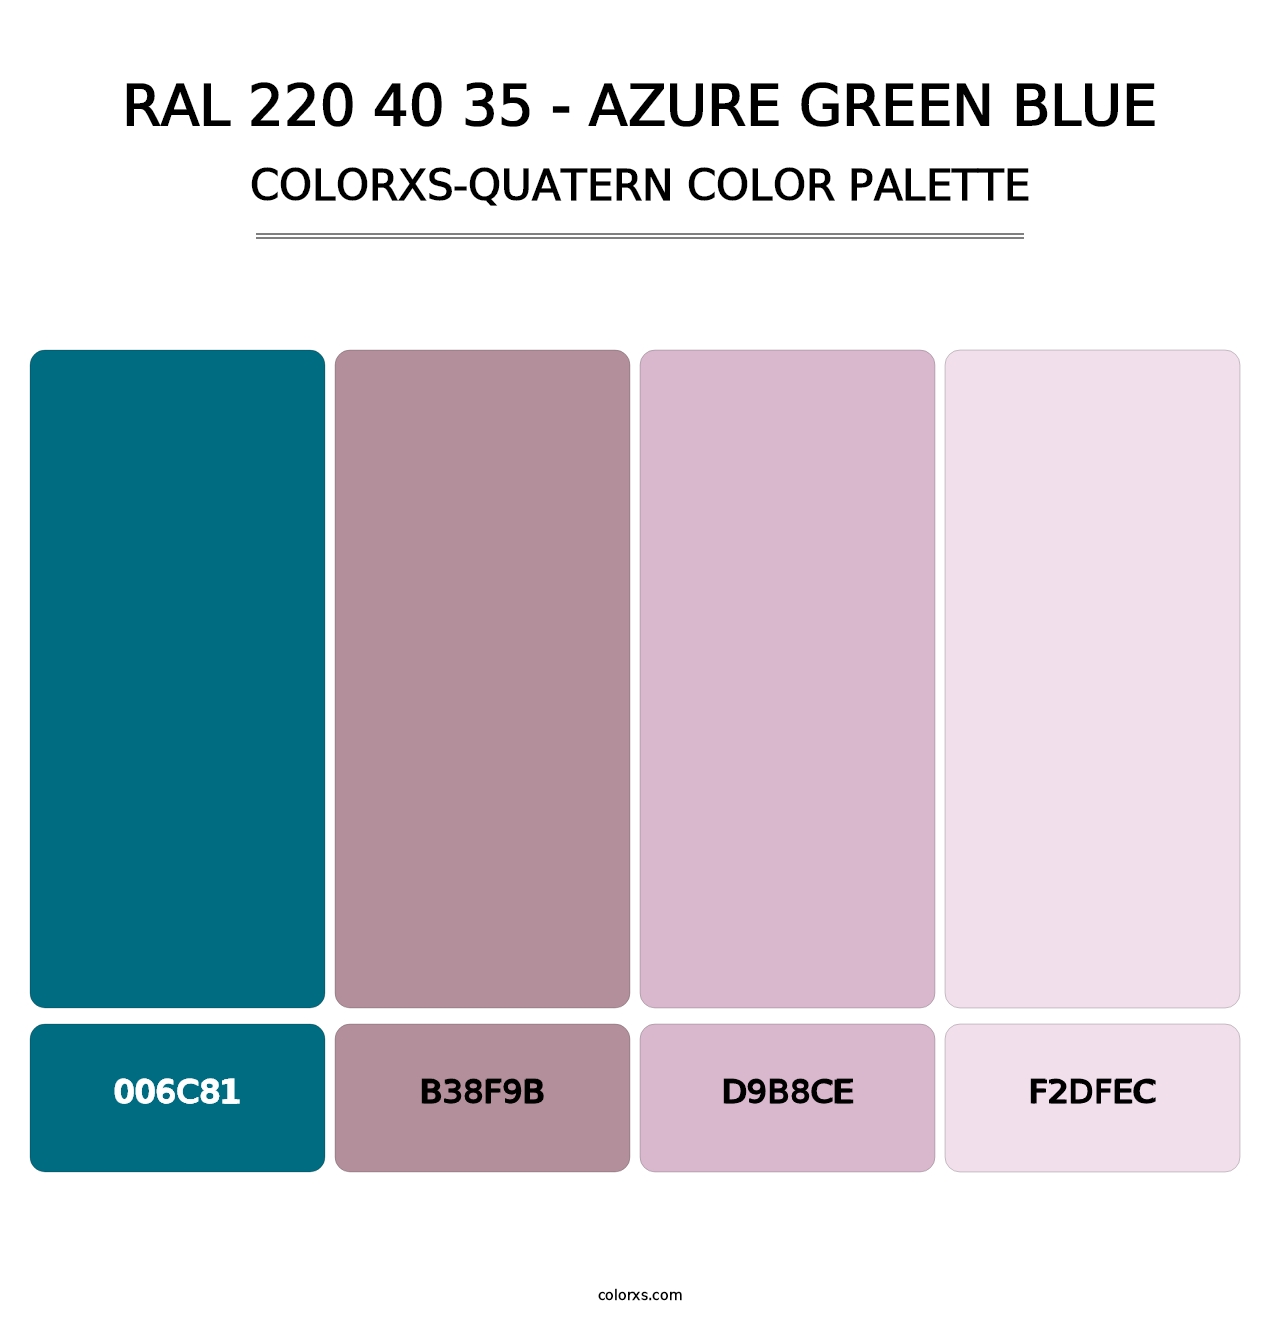 RAL 220 40 35 - Azure Green Blue - Colorxs Quatern Palette